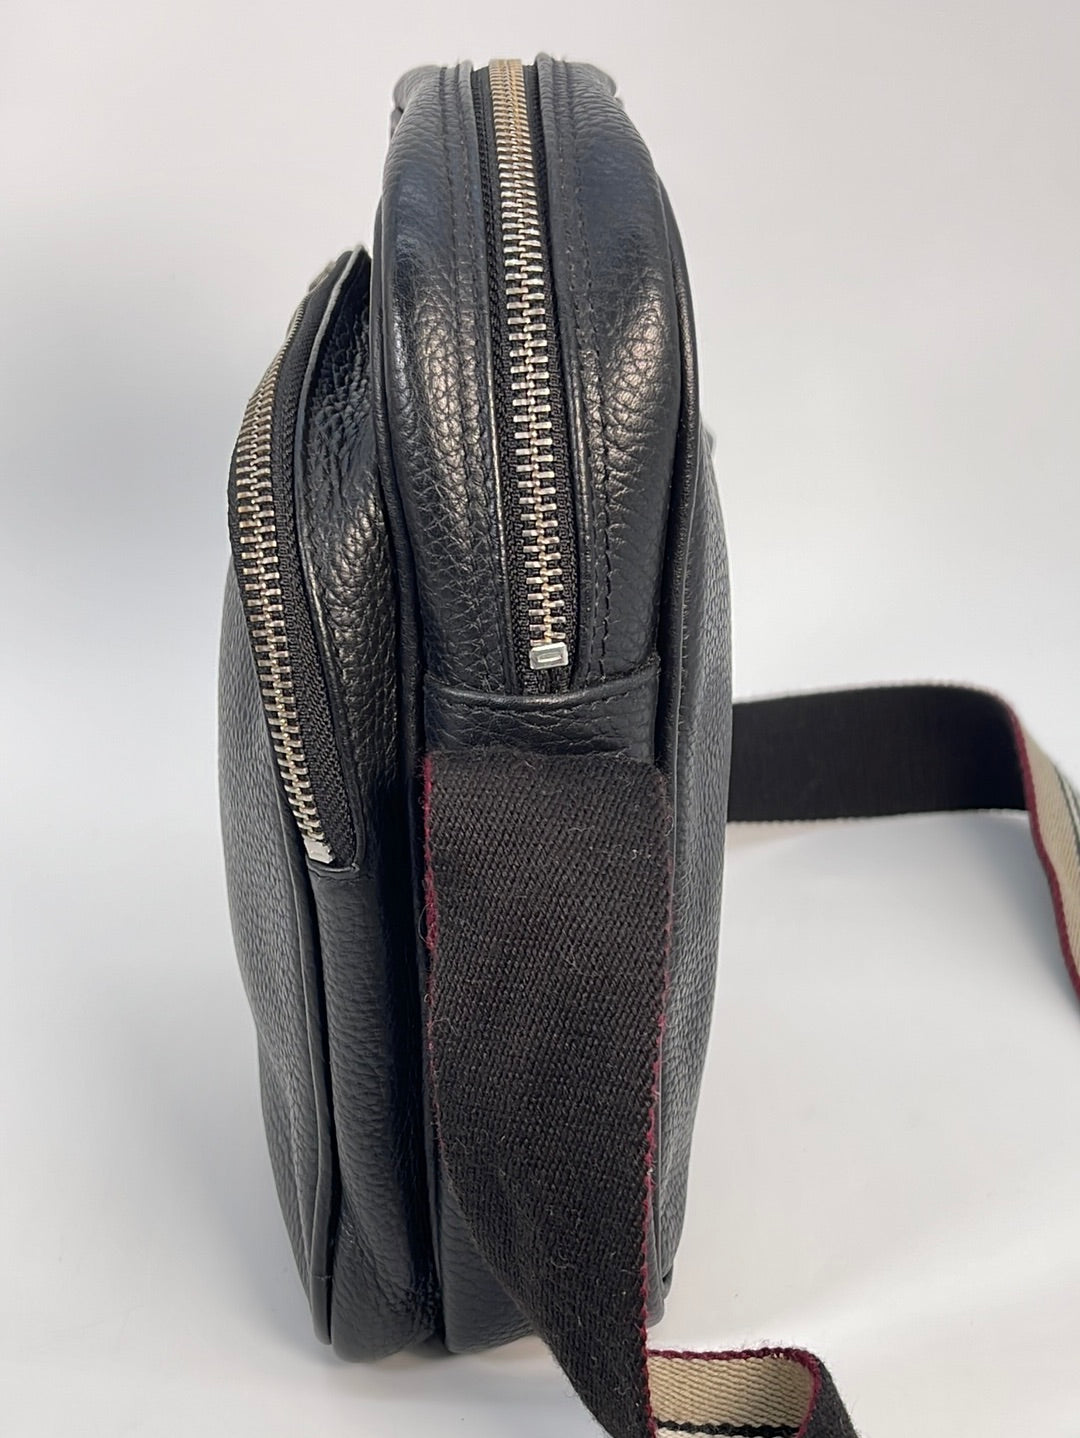 Preloved Burberry Black Leather Crossbody Messenger Bag R7BM3DY 013023